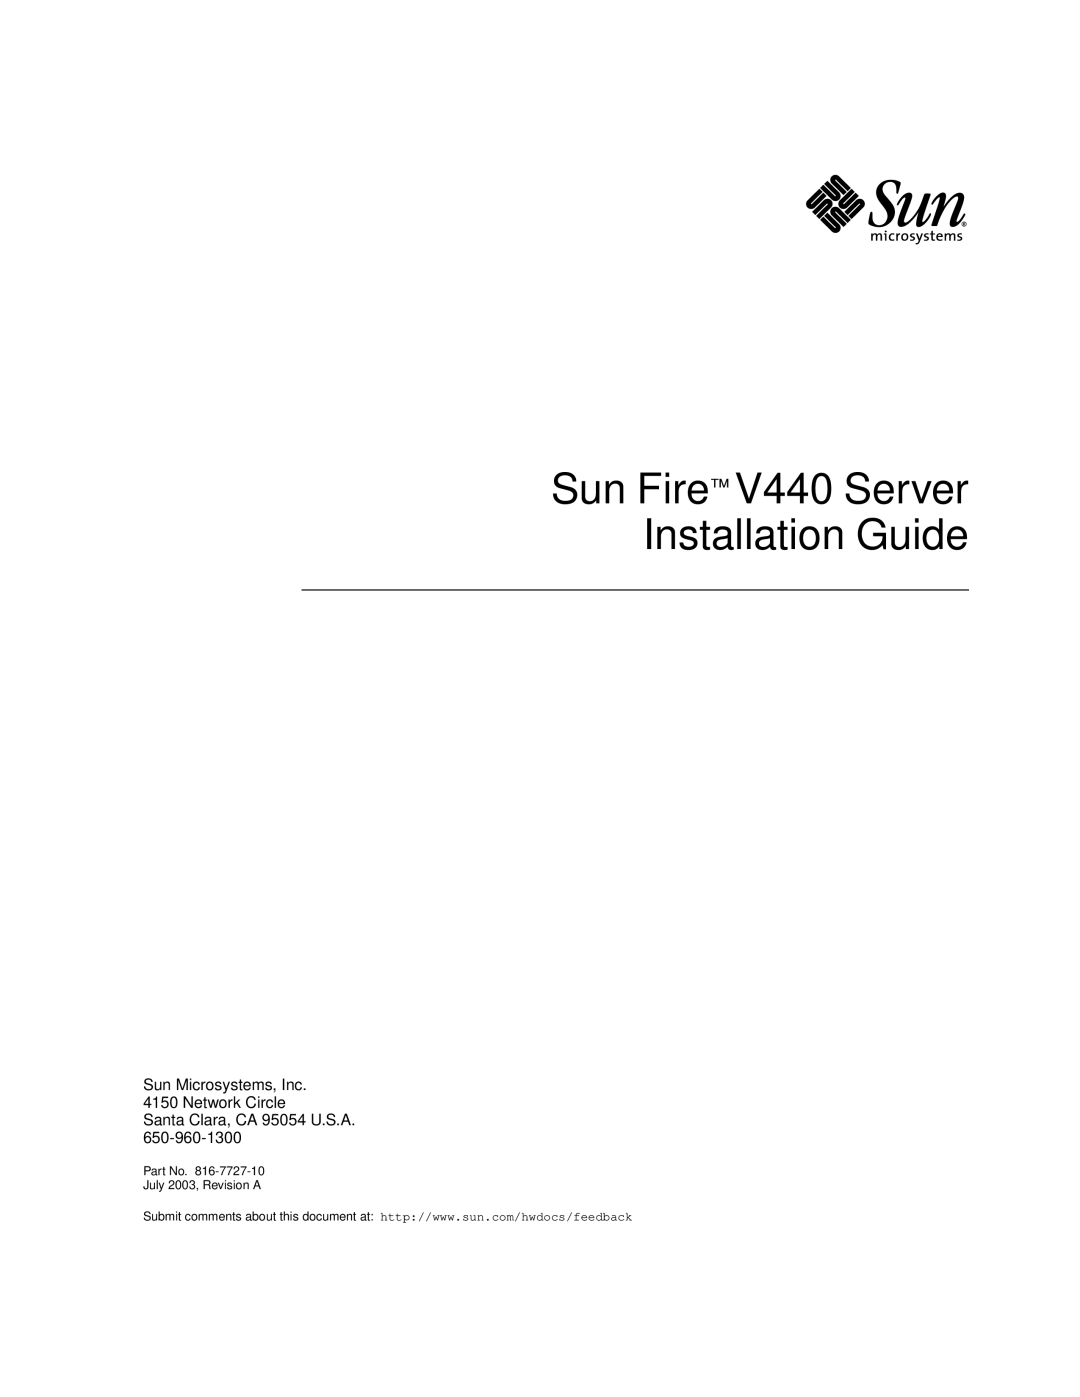 Sun Microsystems 816-7727-10 manual Sun Fire V440 Server Installation Guide, July 2003, Revision A 